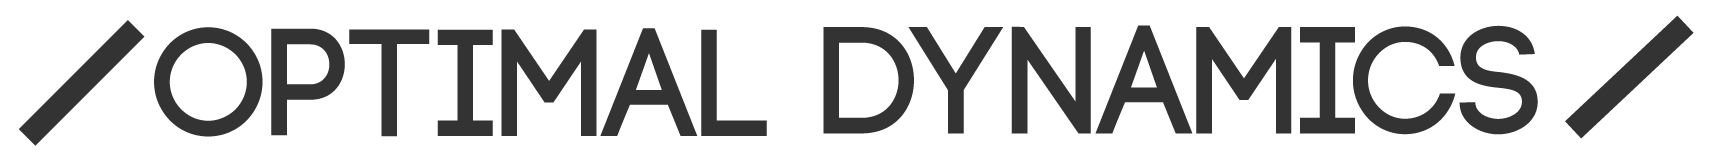 OptimalDynamics-logo